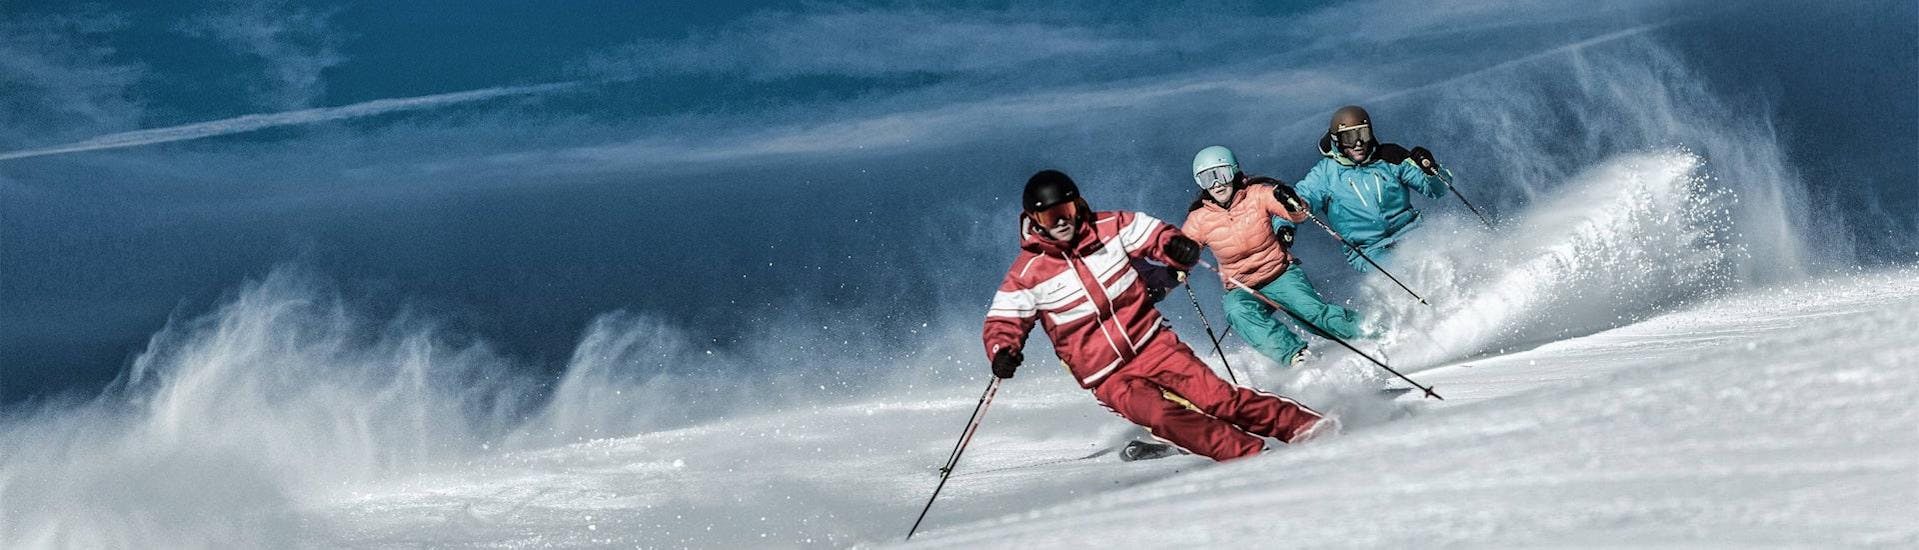 Ski Lessons for Adults - Advanced.